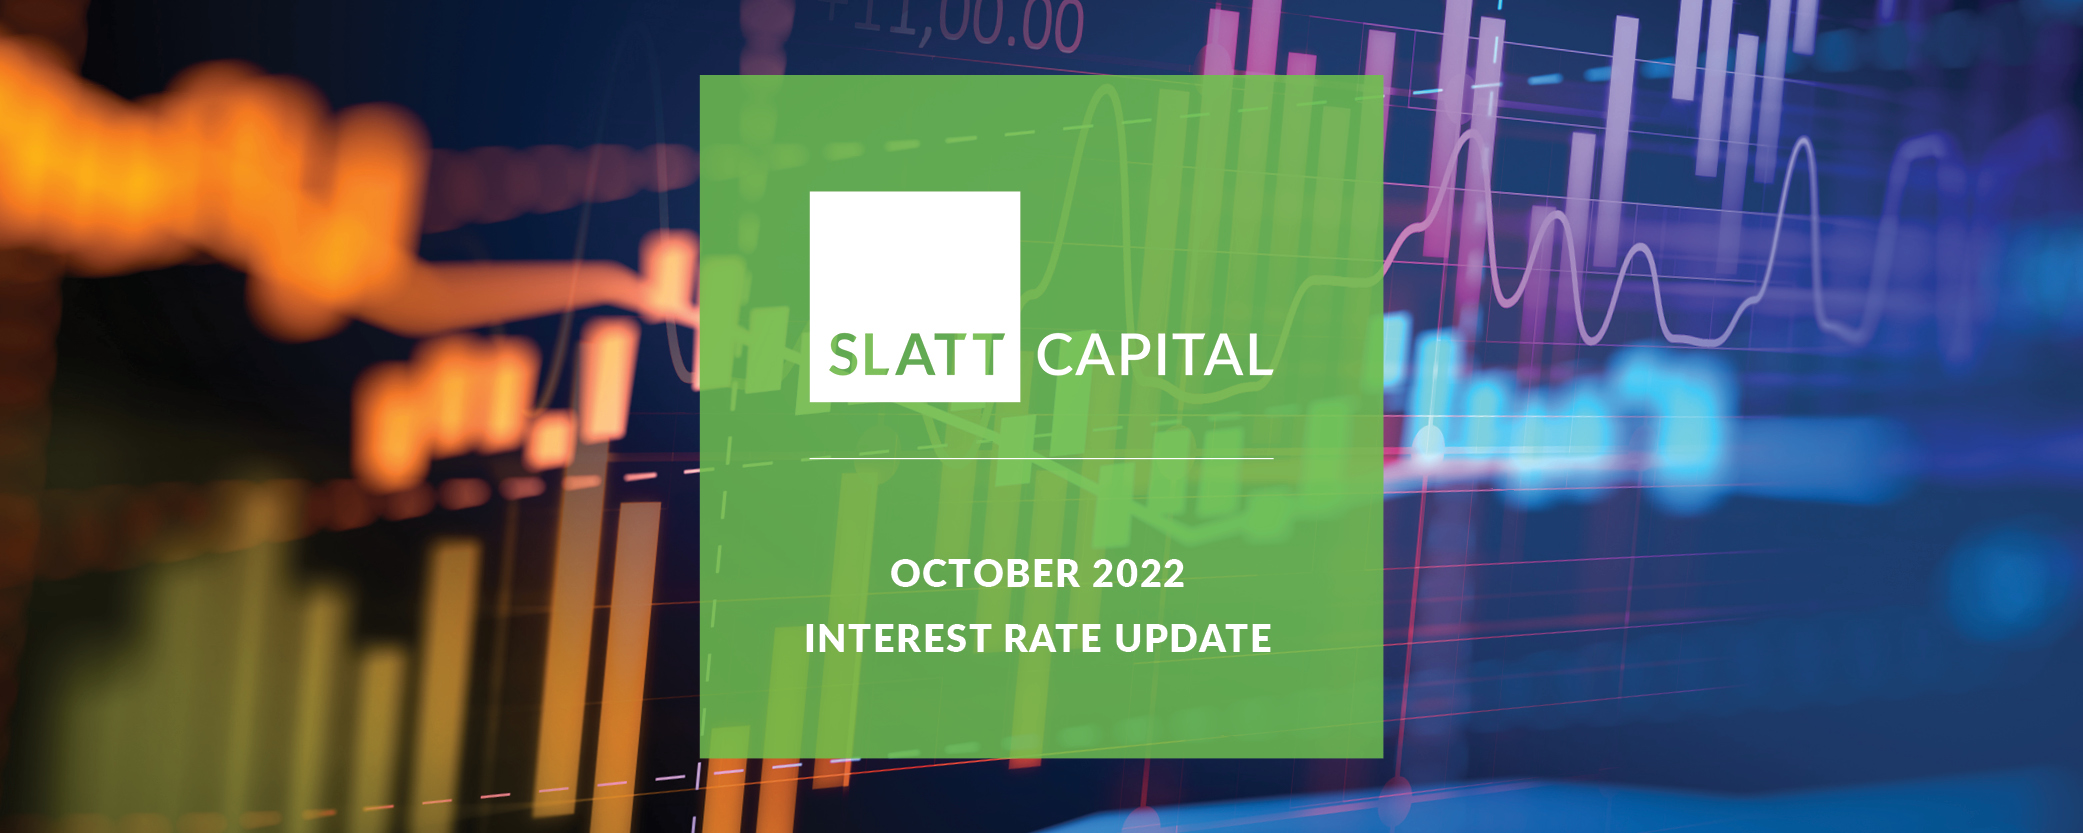 October interest rate update